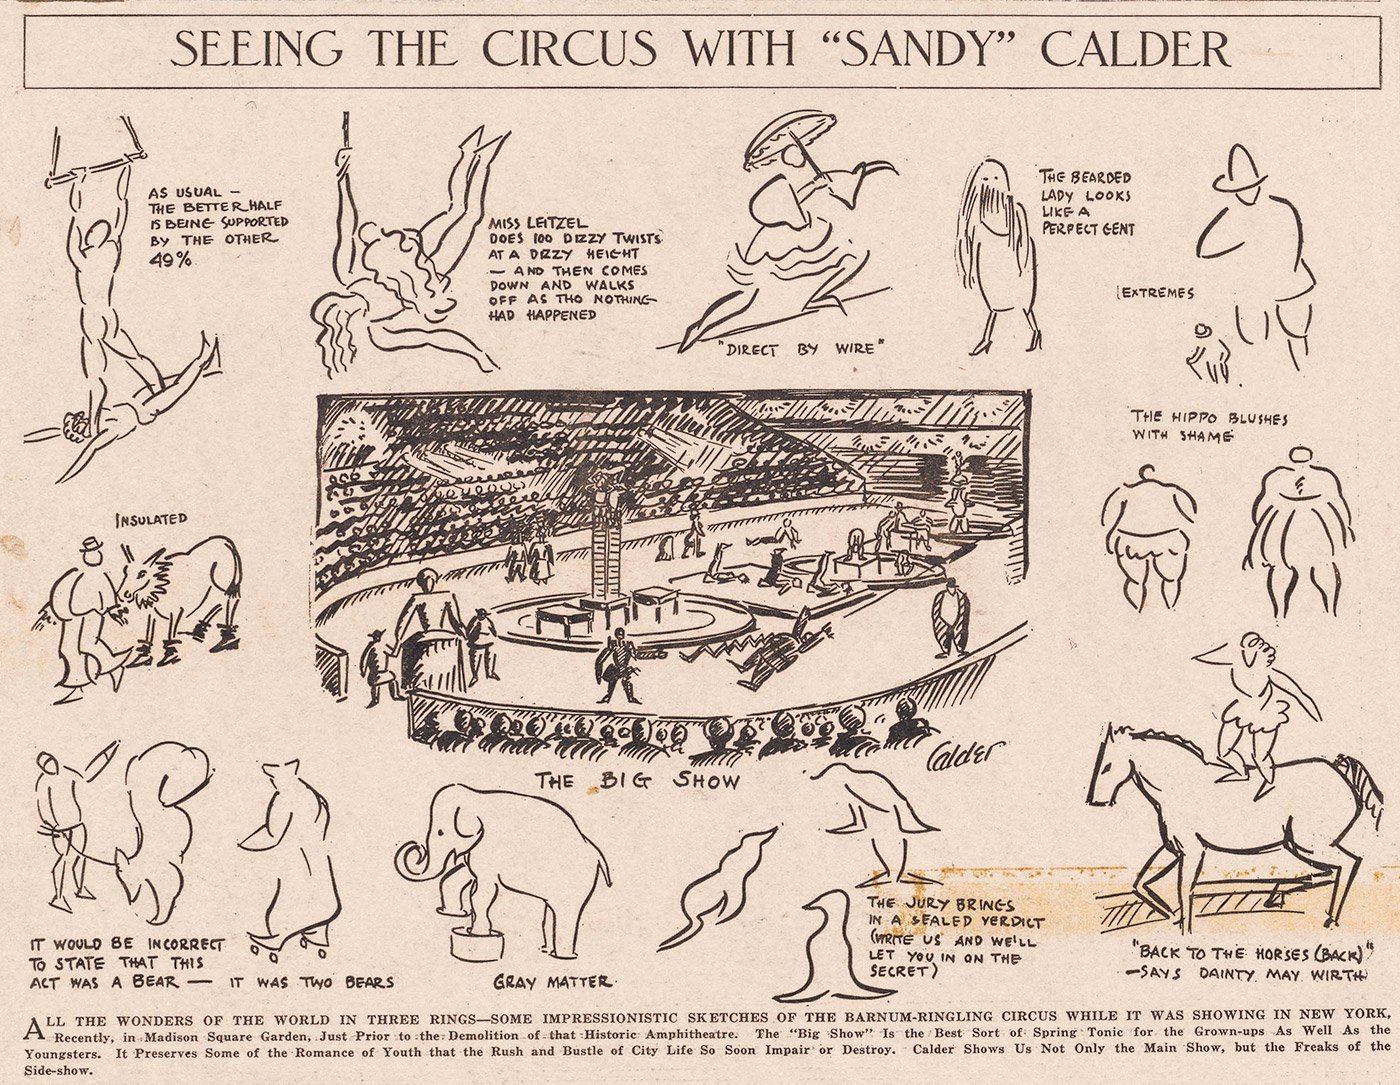 Alexander Calder (1898-1976) Seeing the Circus with “Sandy” Calder, May 23, 1925. National Police Gazette. Calder Foundation, New York . © 2017 Calder Foundation, NewYork / Artists Rights Society (ARS), N.Y.